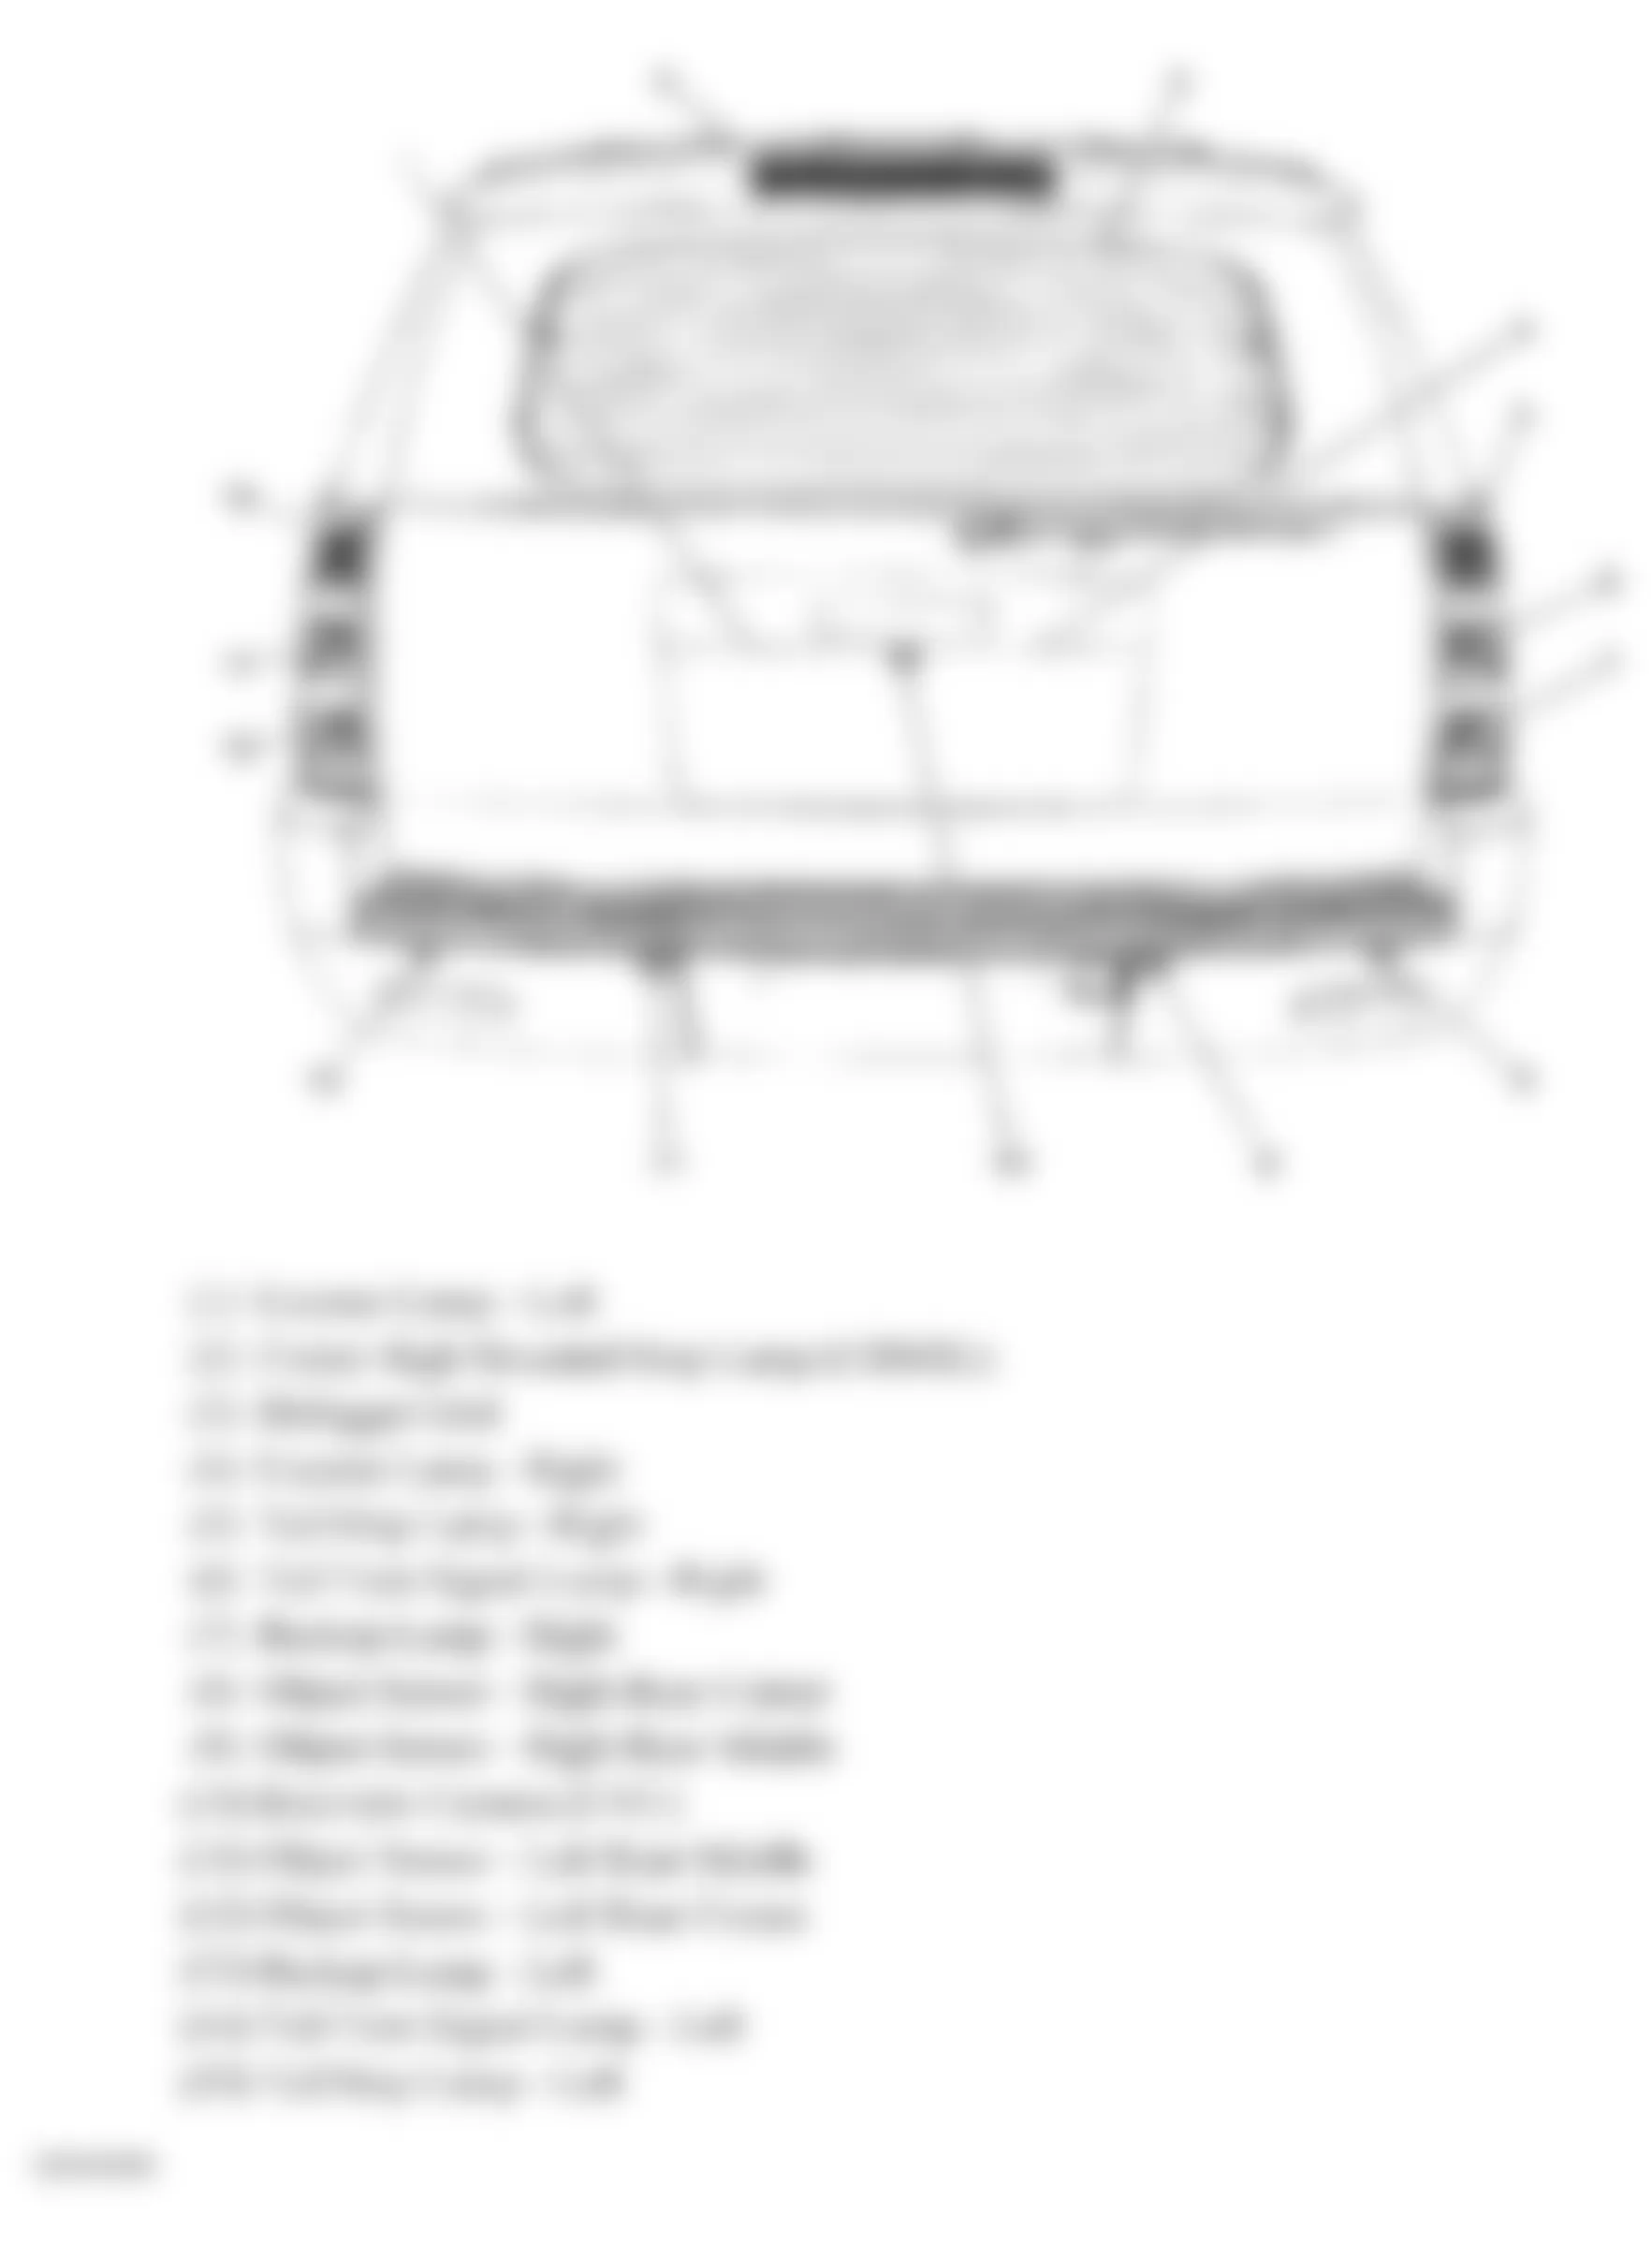 GMC Yukon Hybrid 2009 - Component Locations -  Rear Of Vehicle (Yukon W/One Piece Liftgate)